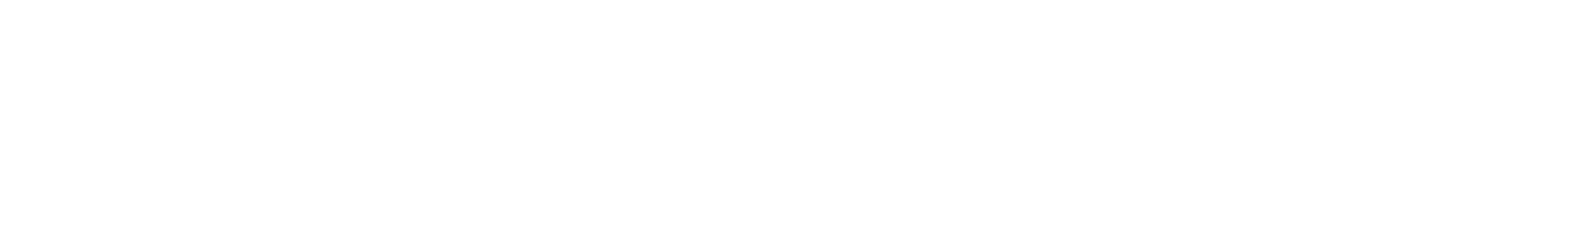 HEXO logo for dark backgrounds (transparent PNG)